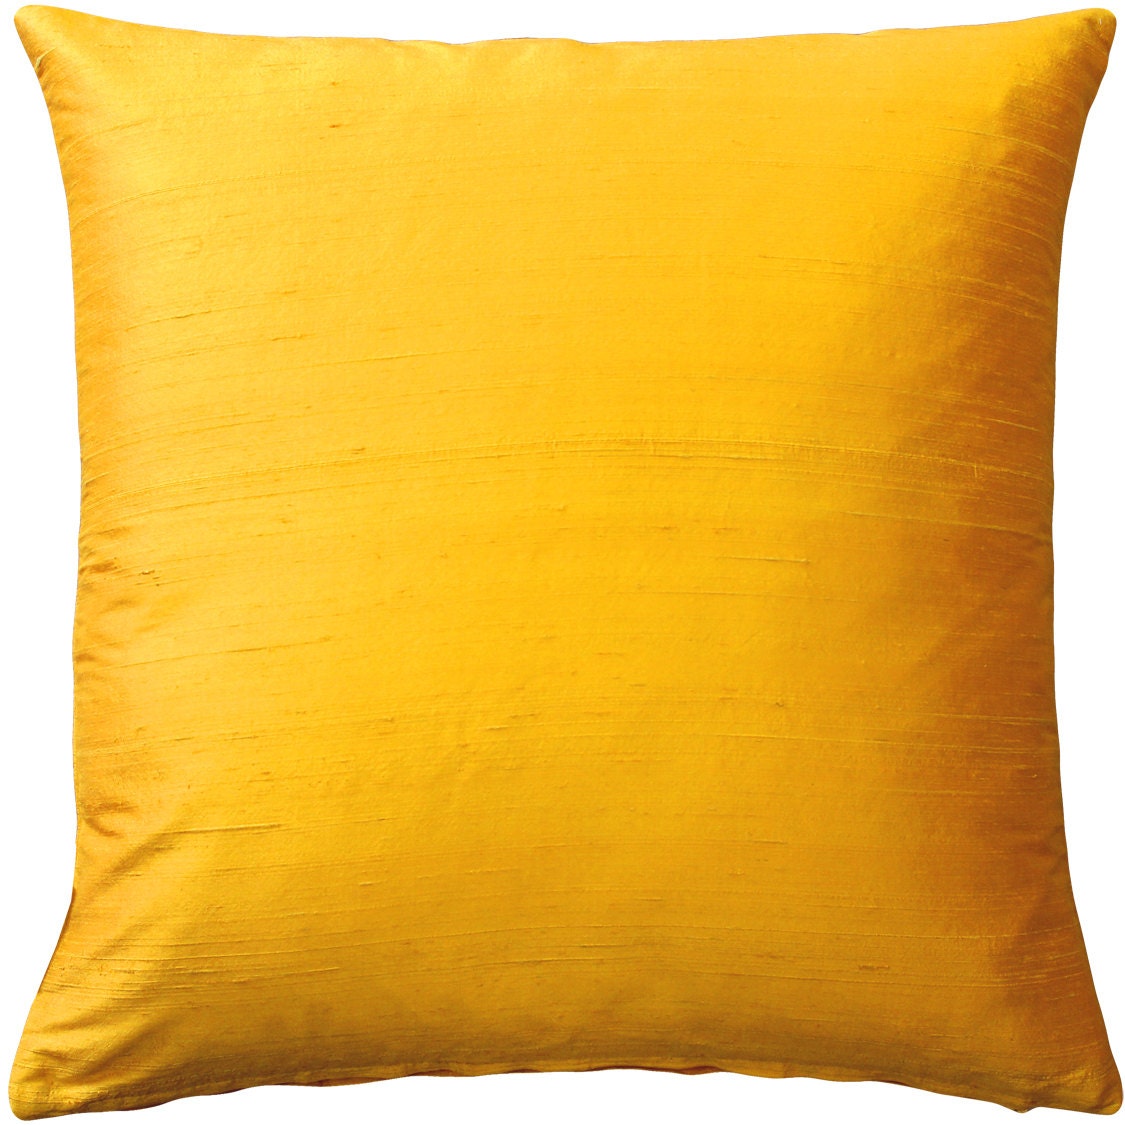 Sankara Deep Yellow Silk 20x20 Throw Pillow insert Included - Etsy